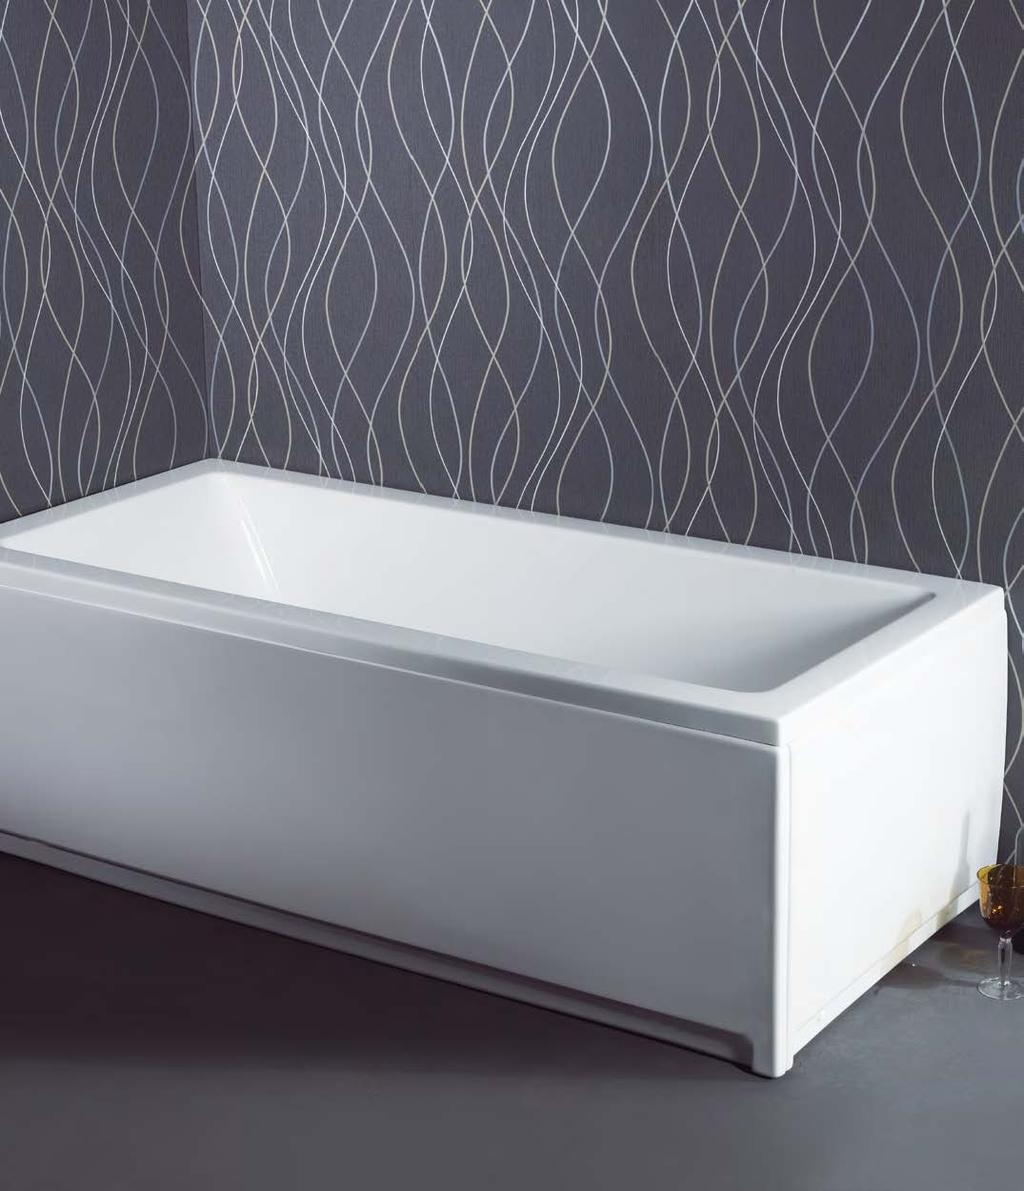 QUADRA Ευθύγραμμη ακρυλική μπανιέρα με εμπρόσθια και πλαϊνή μετώπη, σε 3 μεγέθη Rectilinear acrylic bathtub with front and side